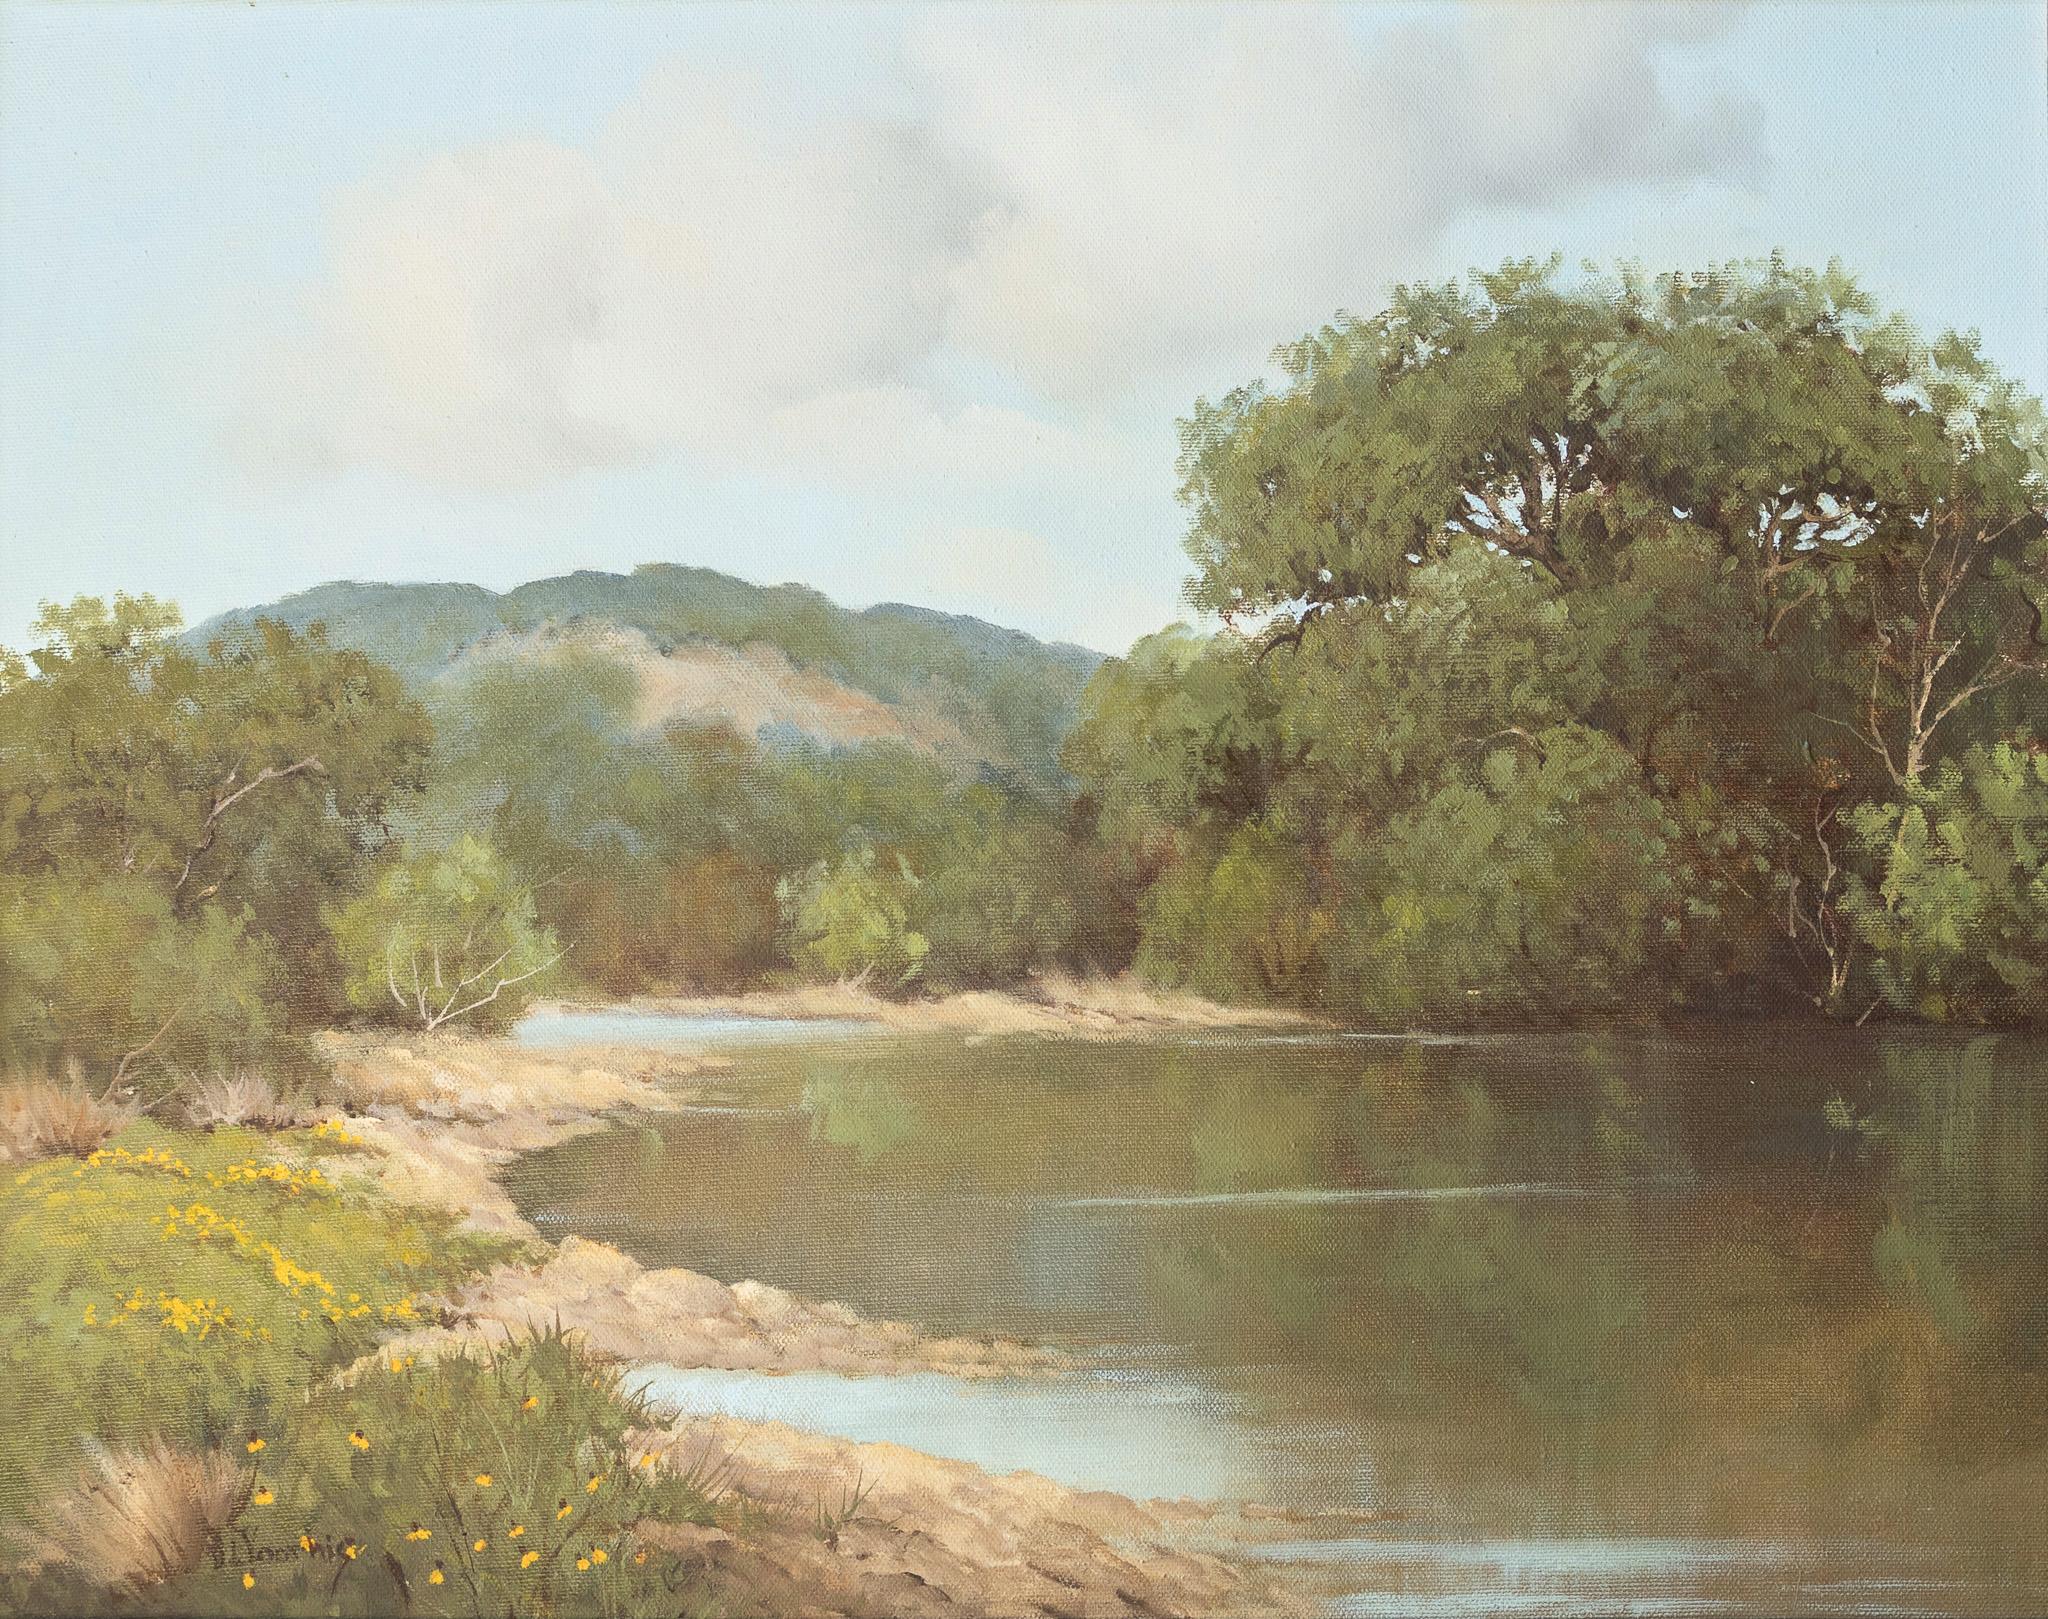 Bette Lou Voorhis Landscape Painting - "River Landscape" Texas Hill Country Nature Scene